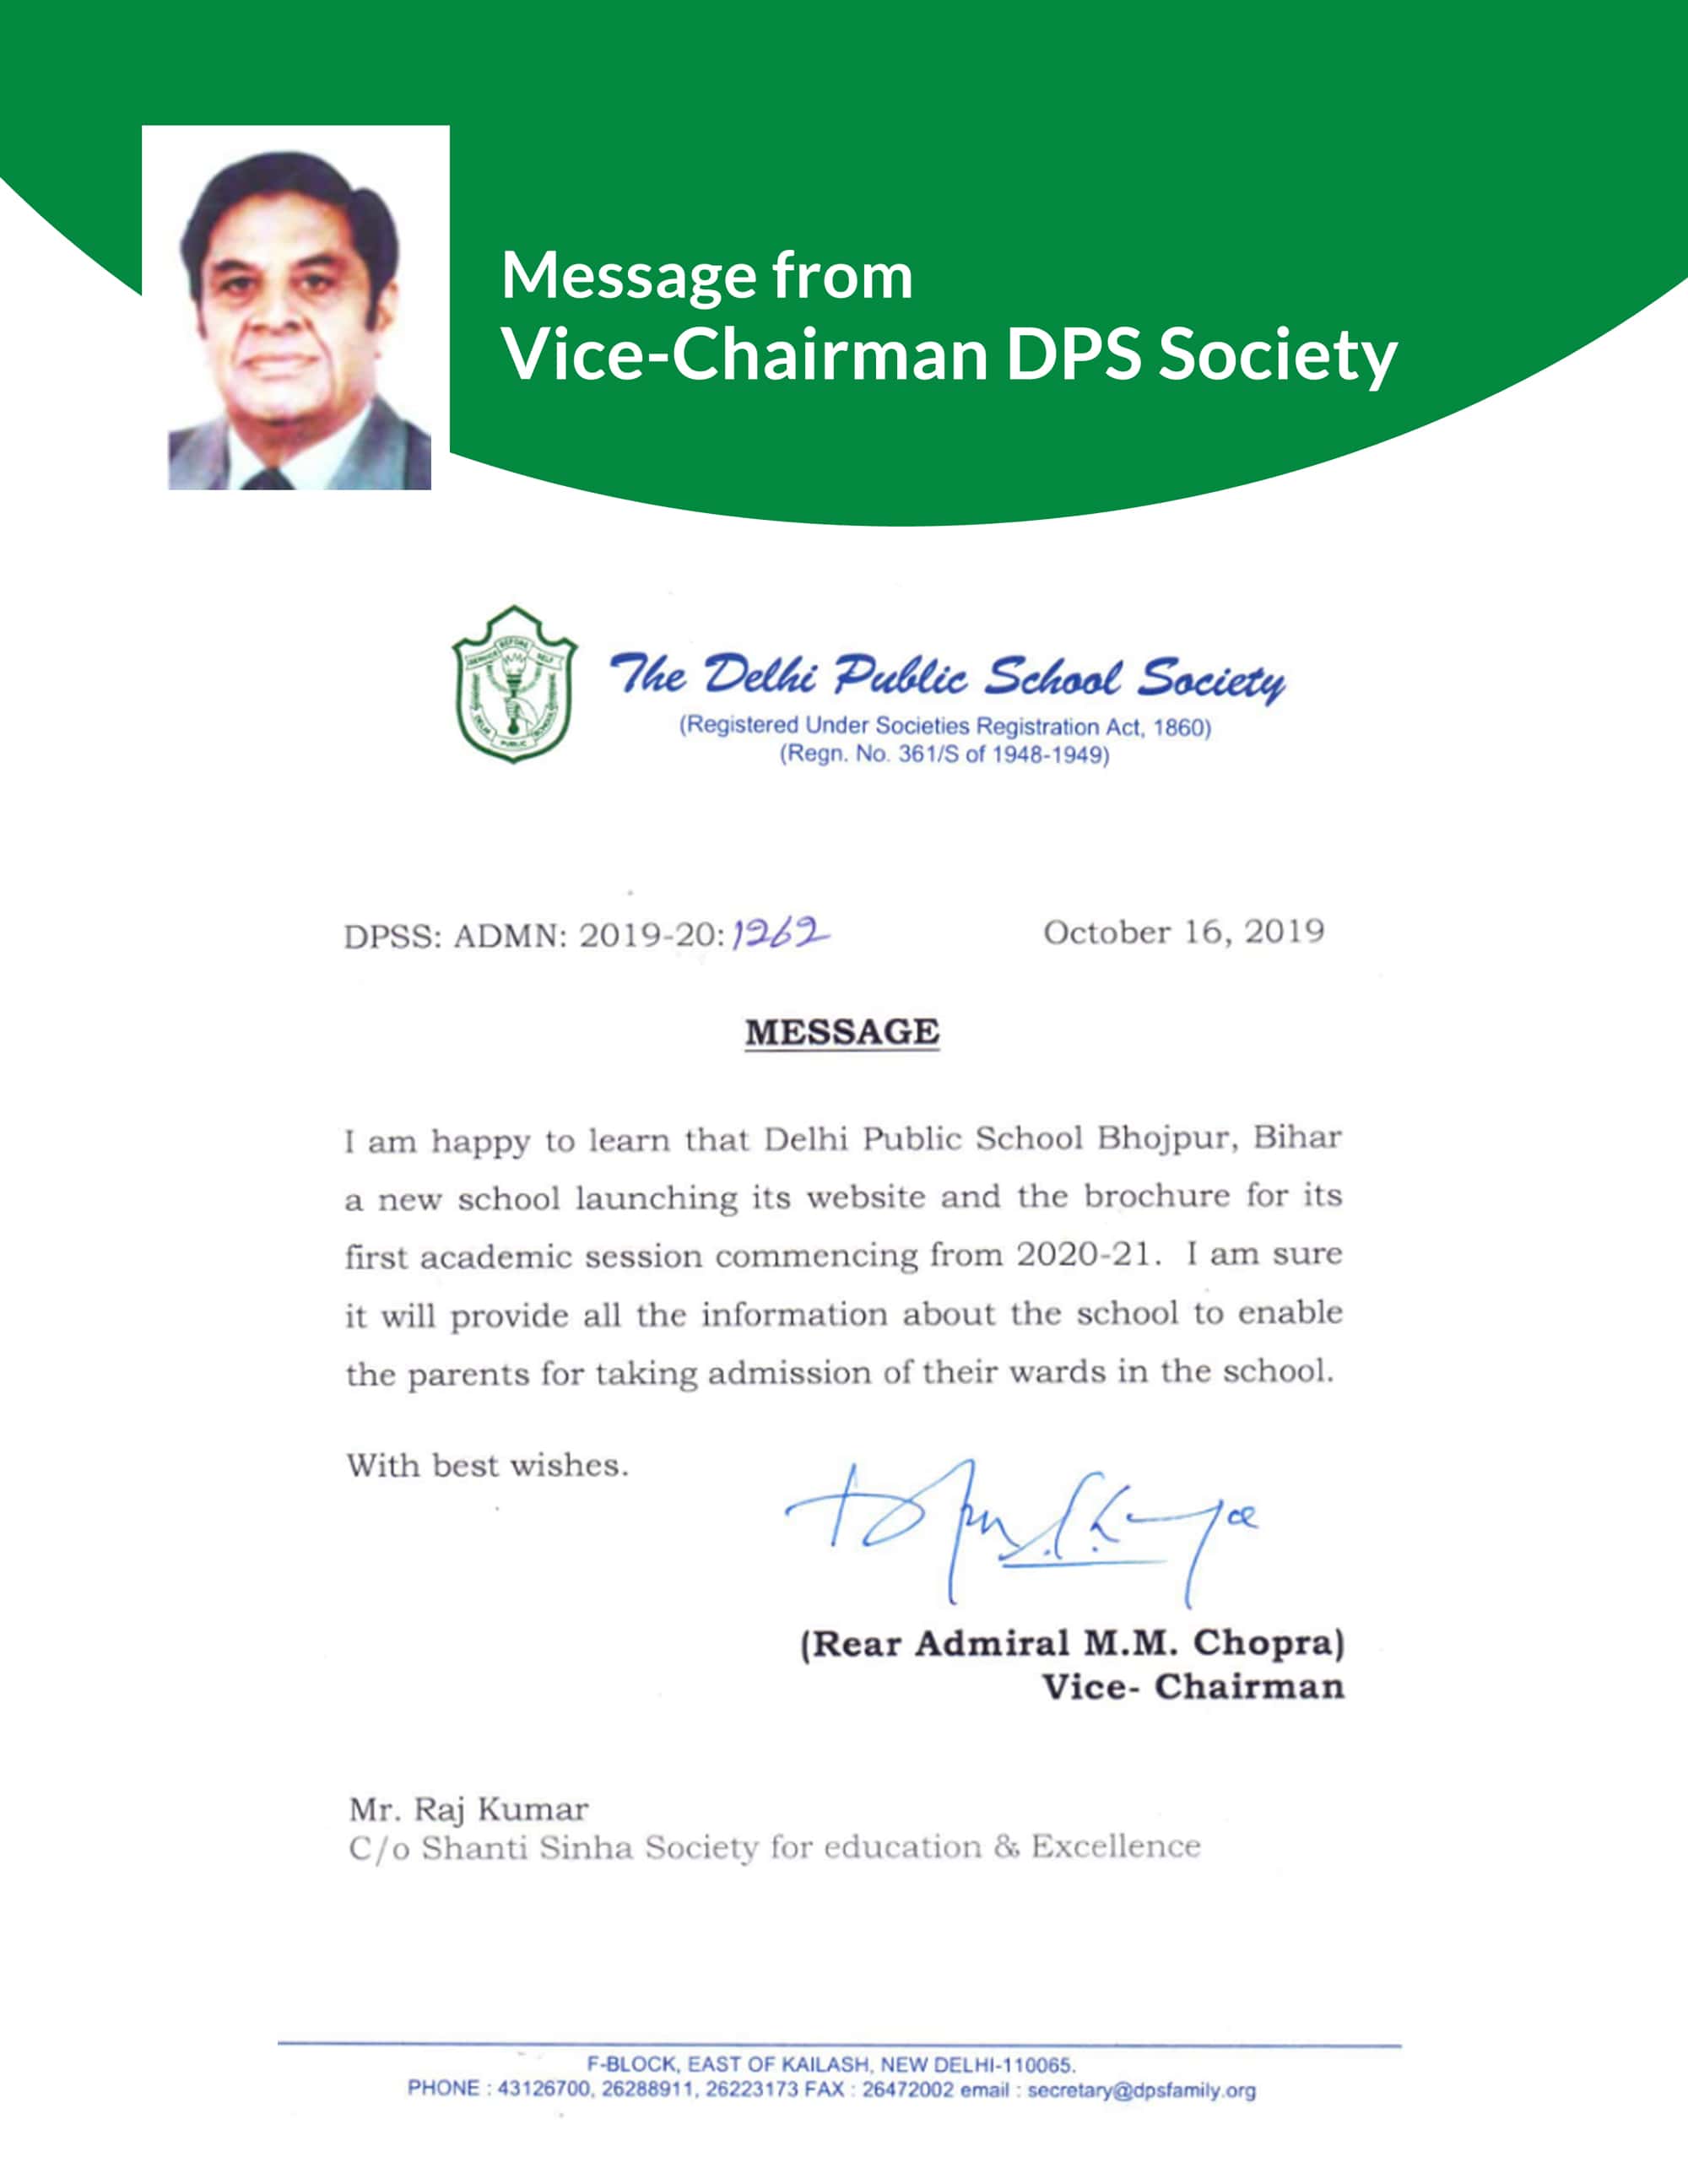 DPS Society Vice-Chairman